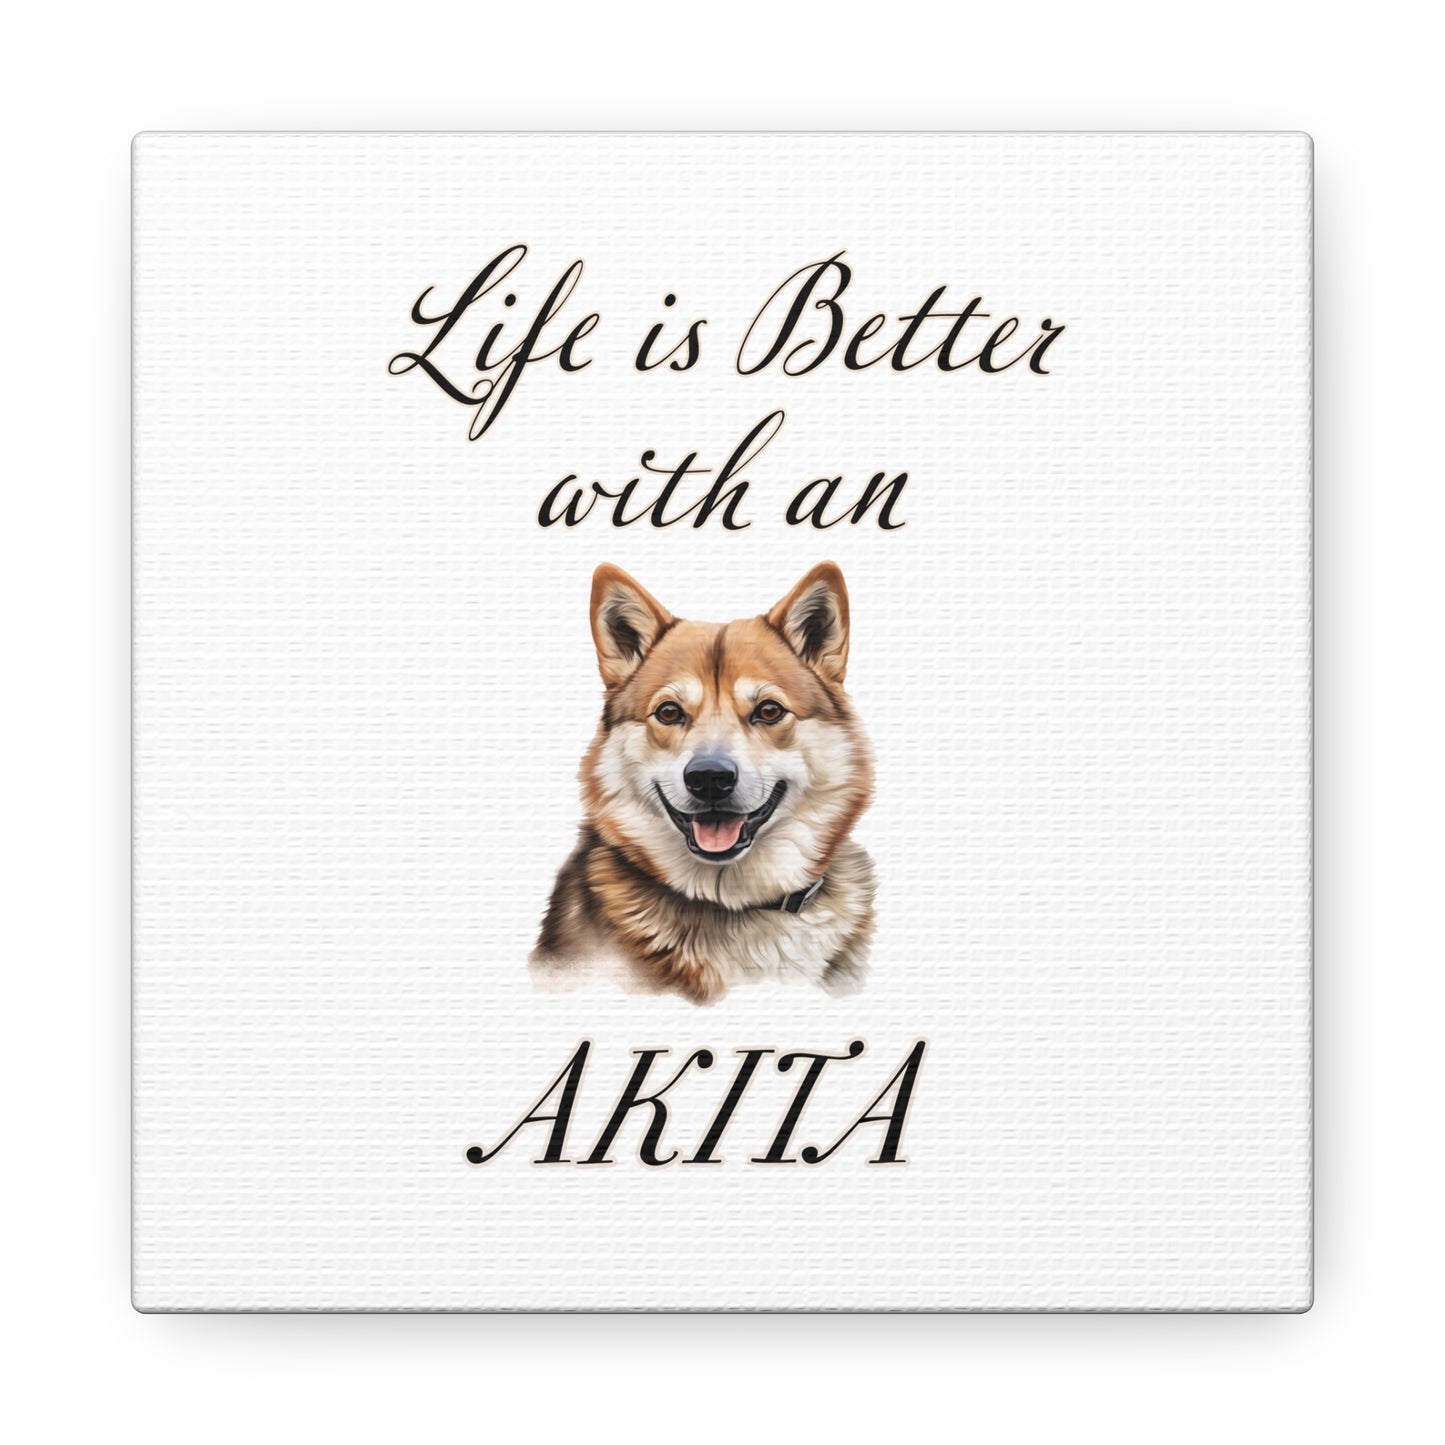 Akita Art - Dog Print - Canvas Gallery Wraps